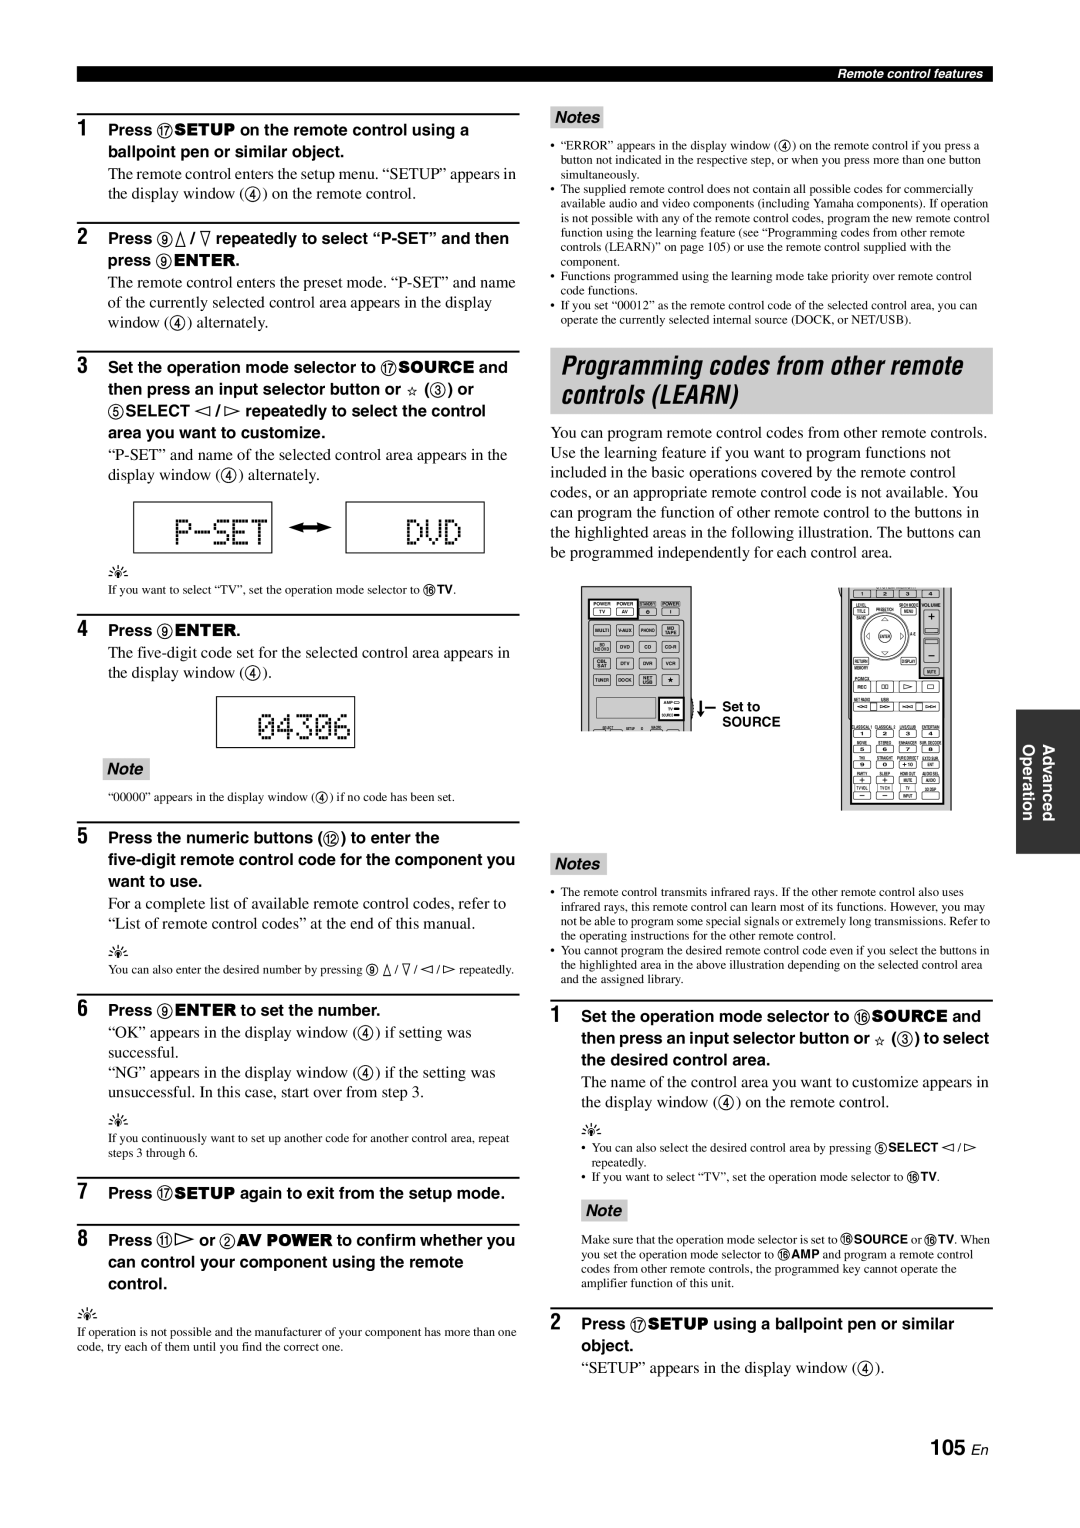 Yamaha DSP-Z11 owner manual P-Set Dvd, 04306, 105 En, Notes, Operation, Advanced 